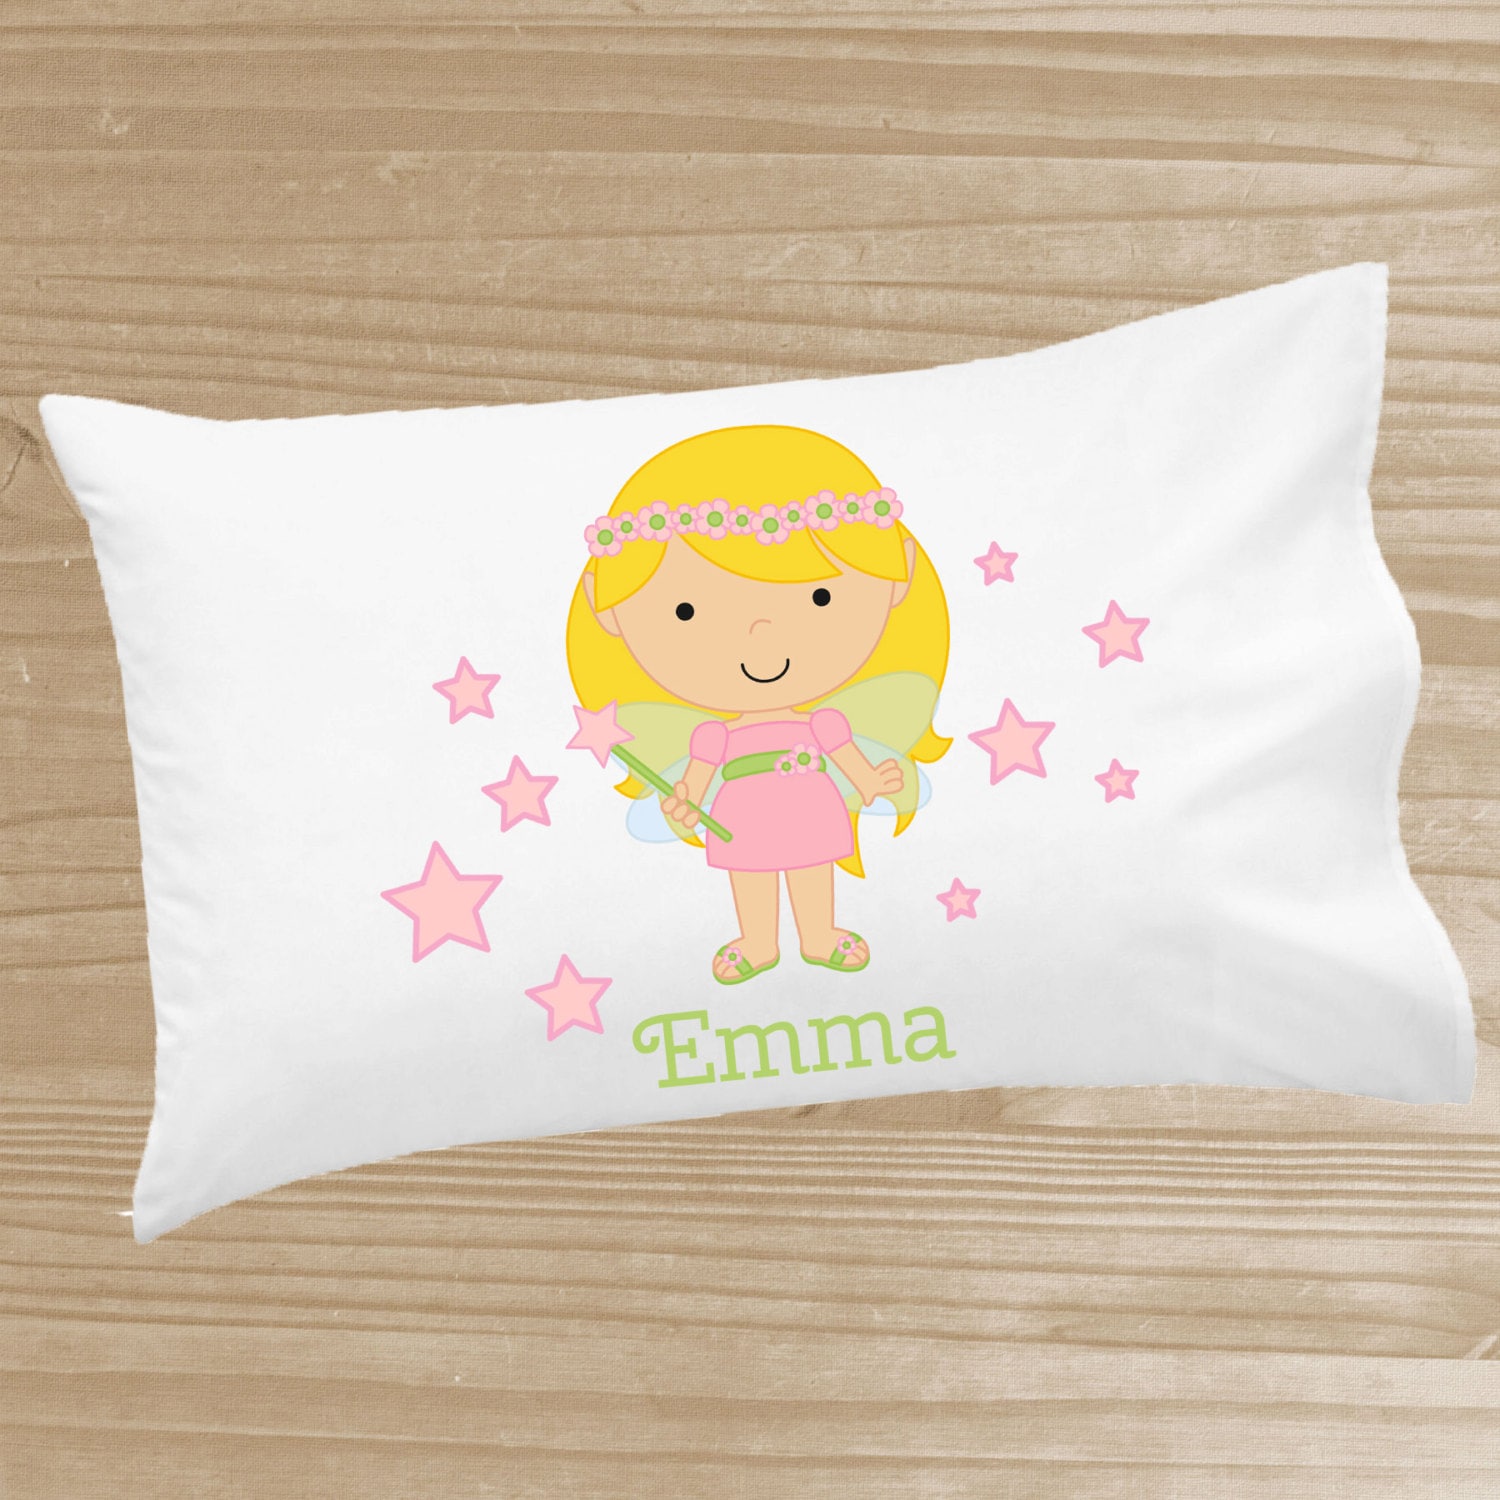 Personalized Kids' Pillowcase Fairy Pillowcase for Girls